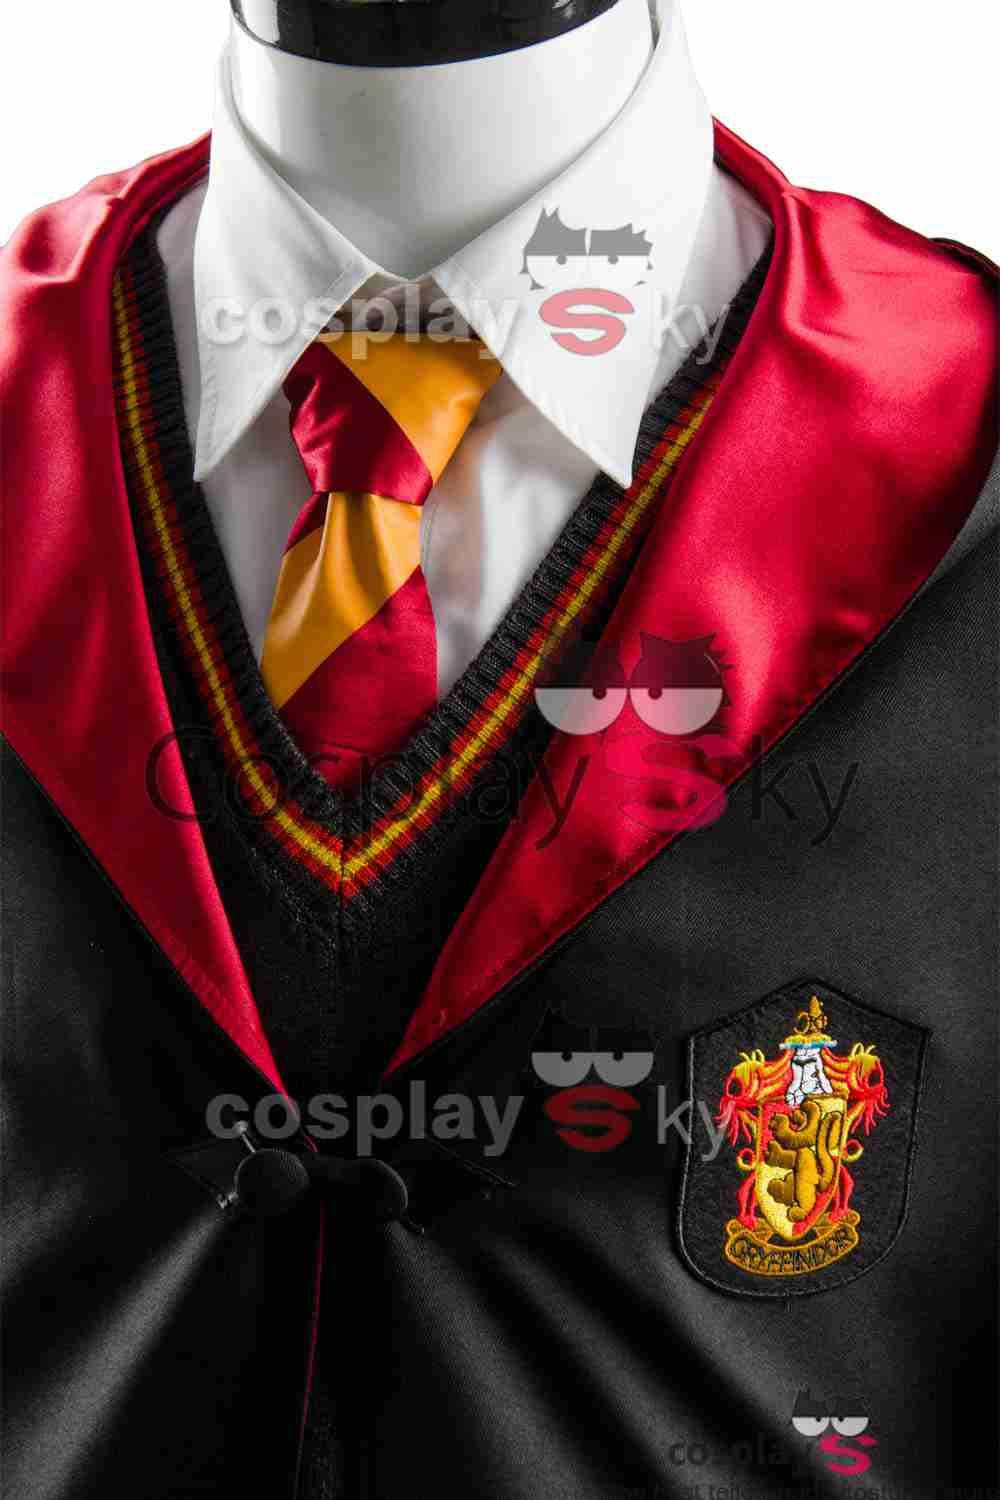 Harry Potter Gryffindor Robe Uniform Harry Potter Cosplay Kostüm Erwachsene Ver. - cosplaycartde